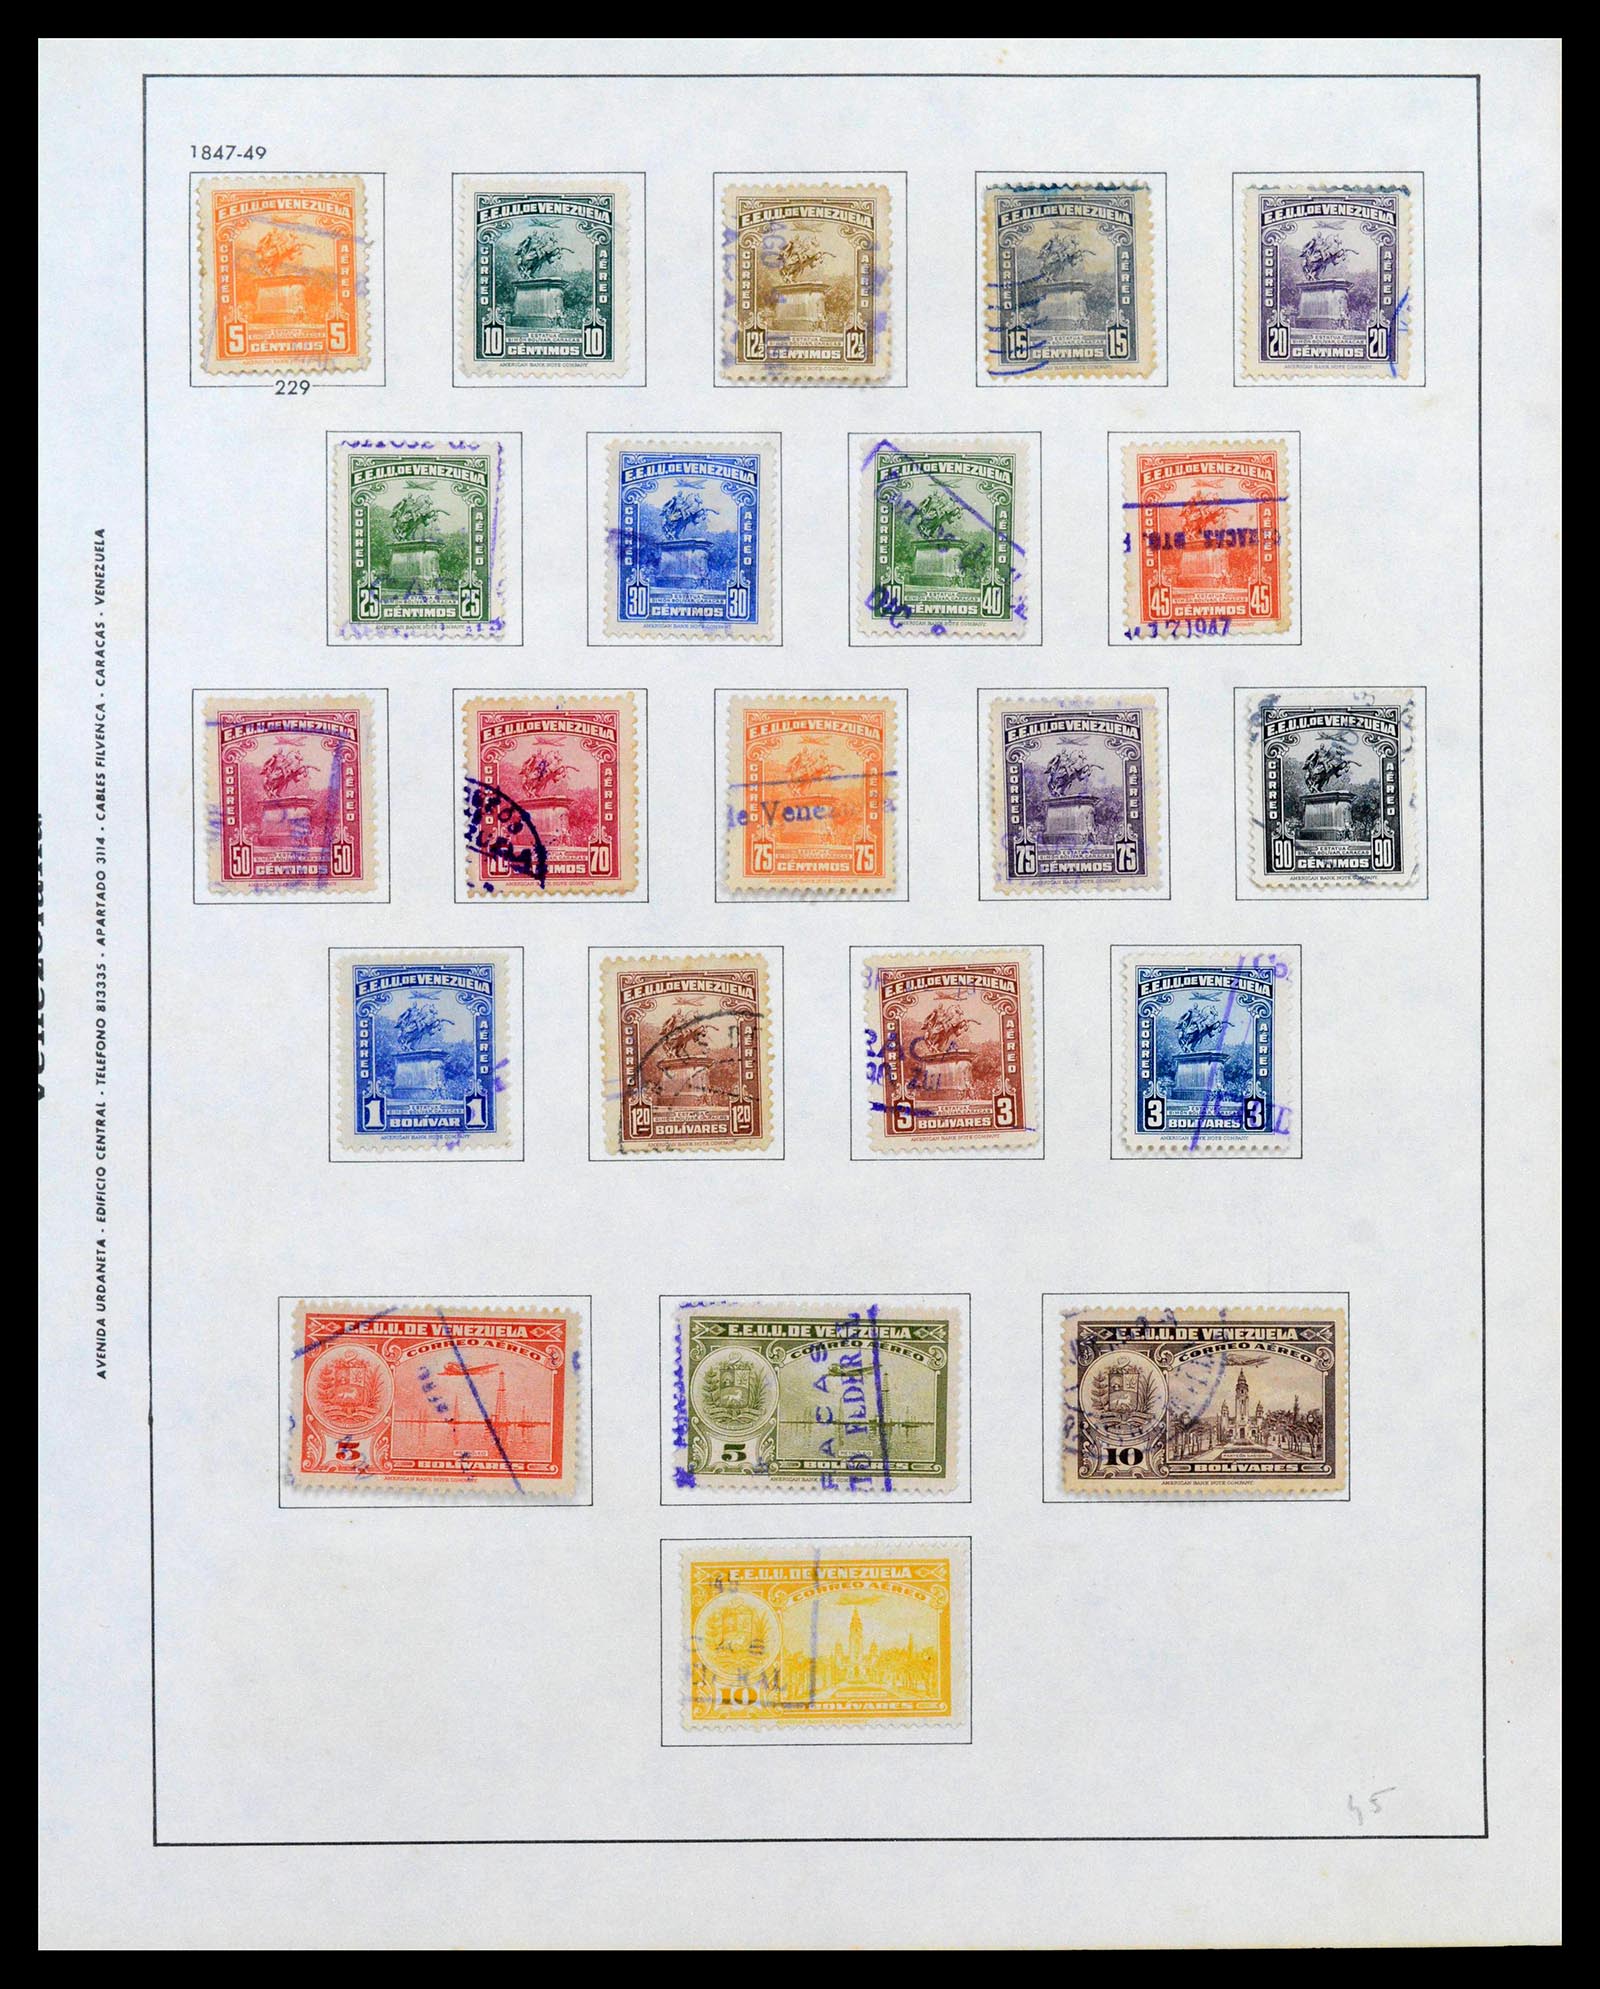 39436 0016 - Stamp collection 39436 Venezuela 1859-1985.